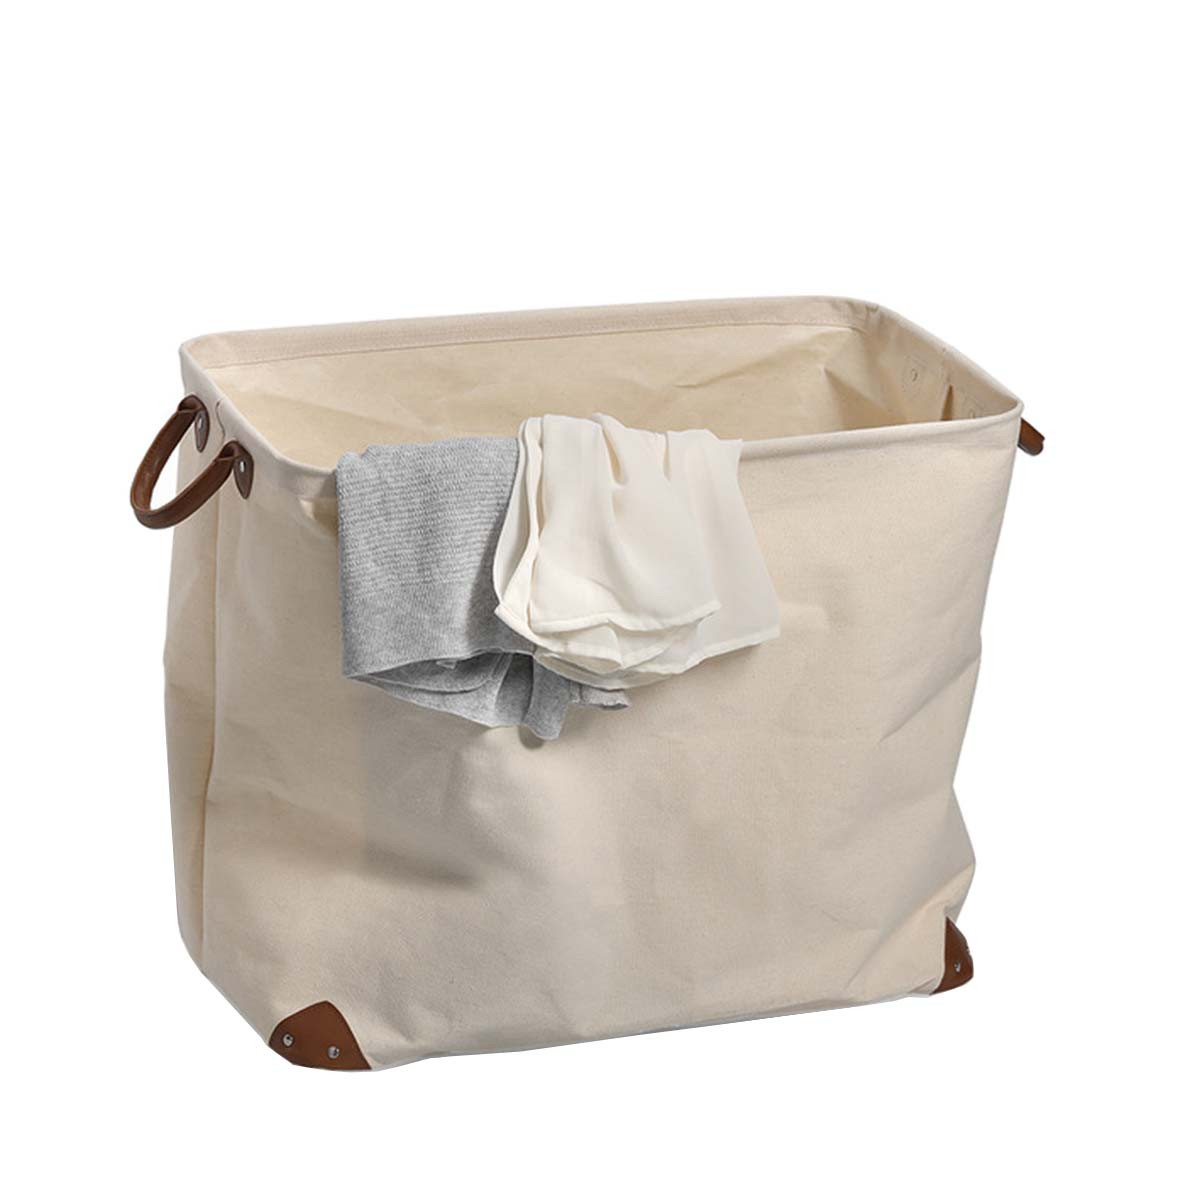 Grand sac à linge en tissu beige - Rigide - ON RANGE TOUT